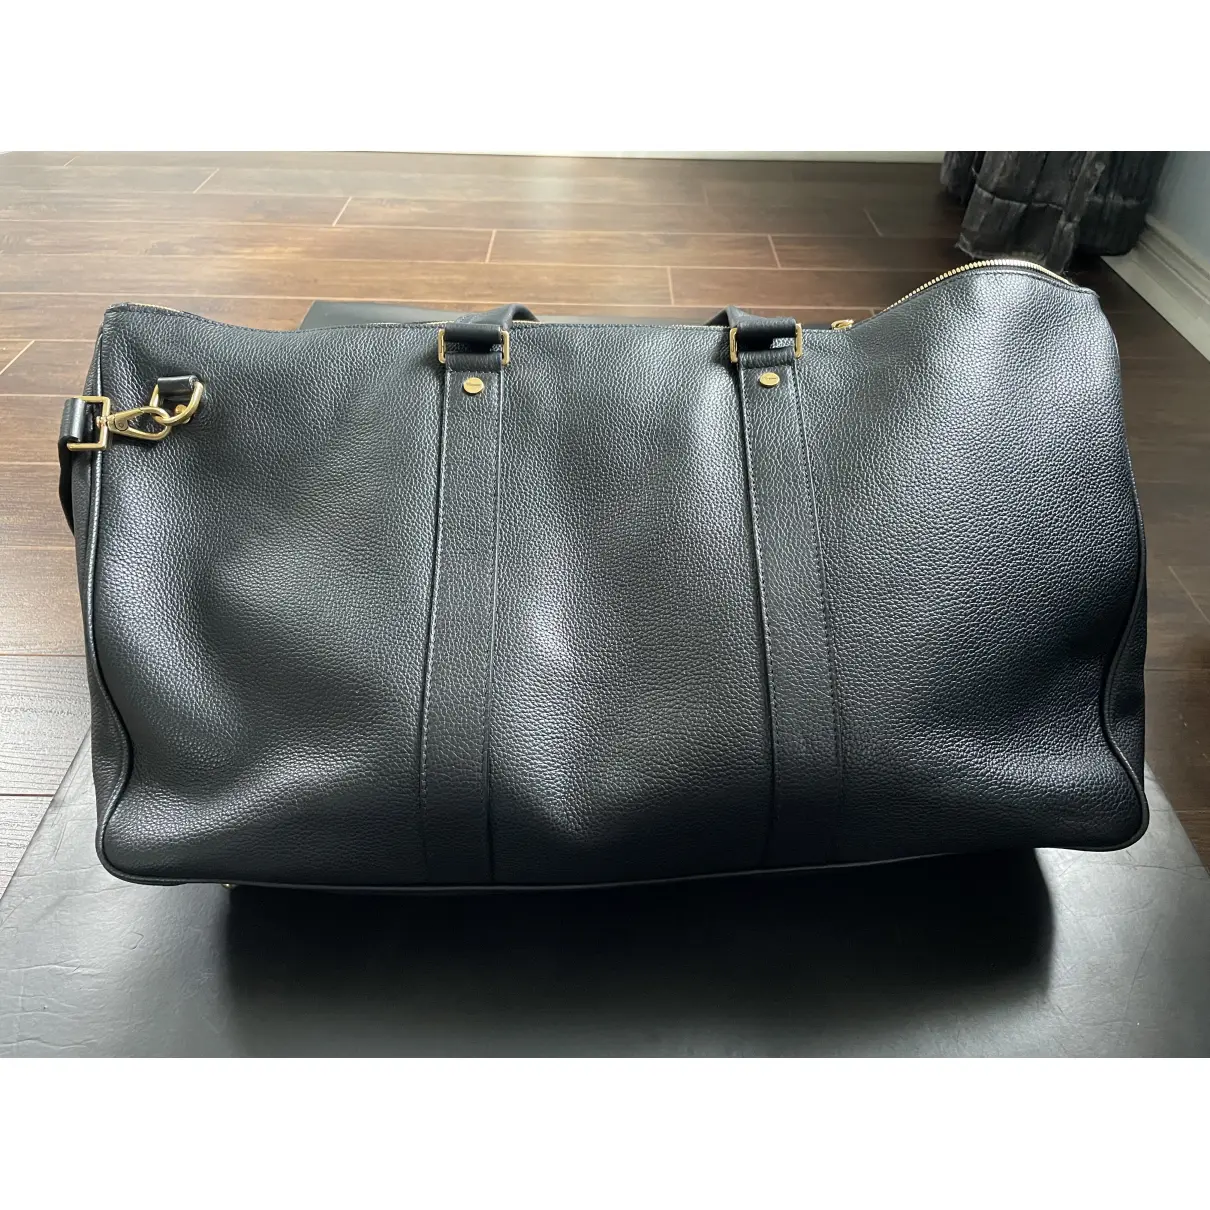 Buy Salvatore Ferragamo Leather travel bag online